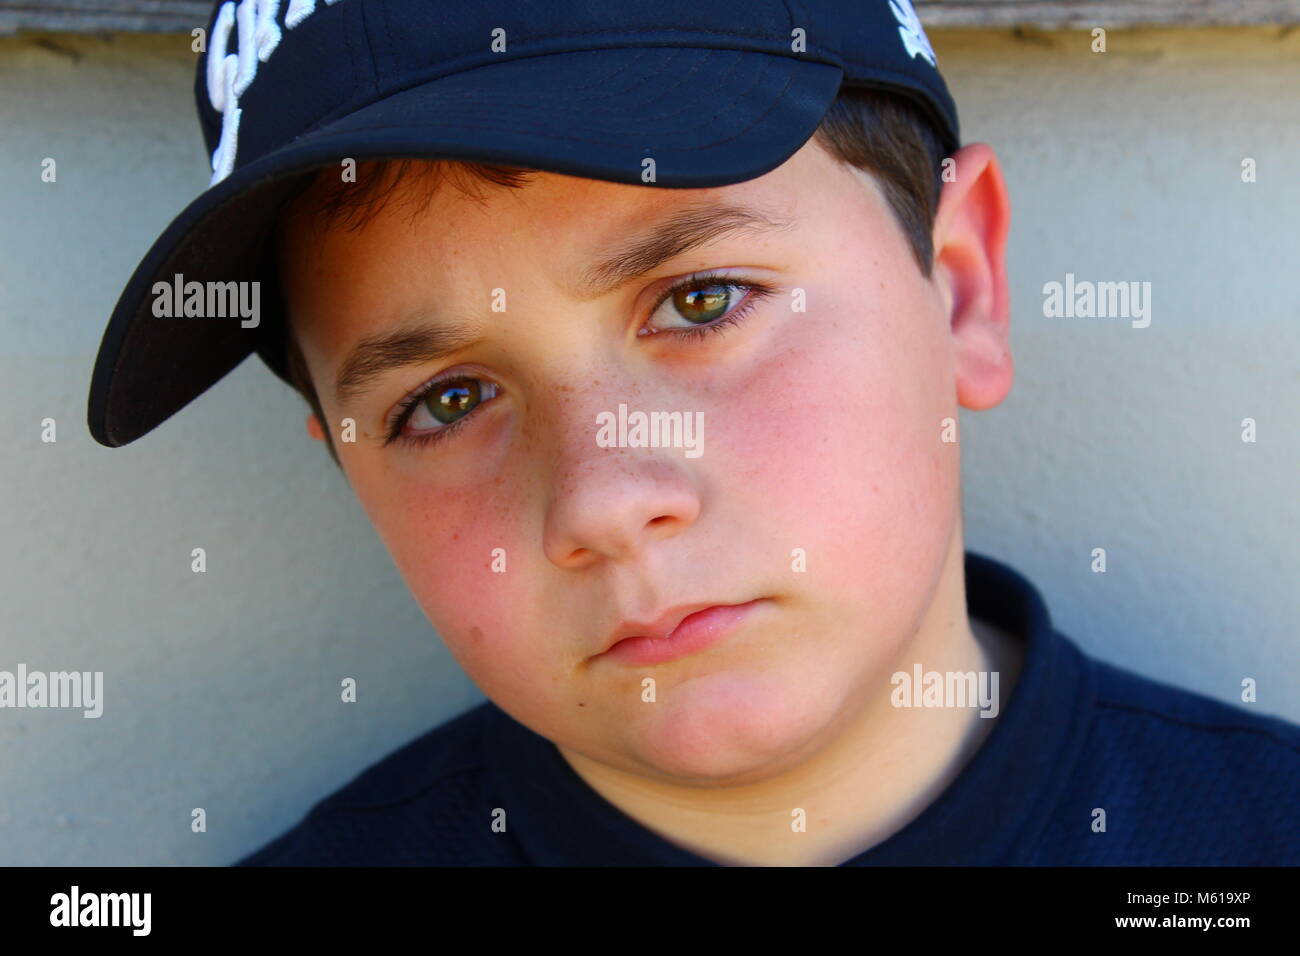 Young Boy with an intense gaze Stock Photo